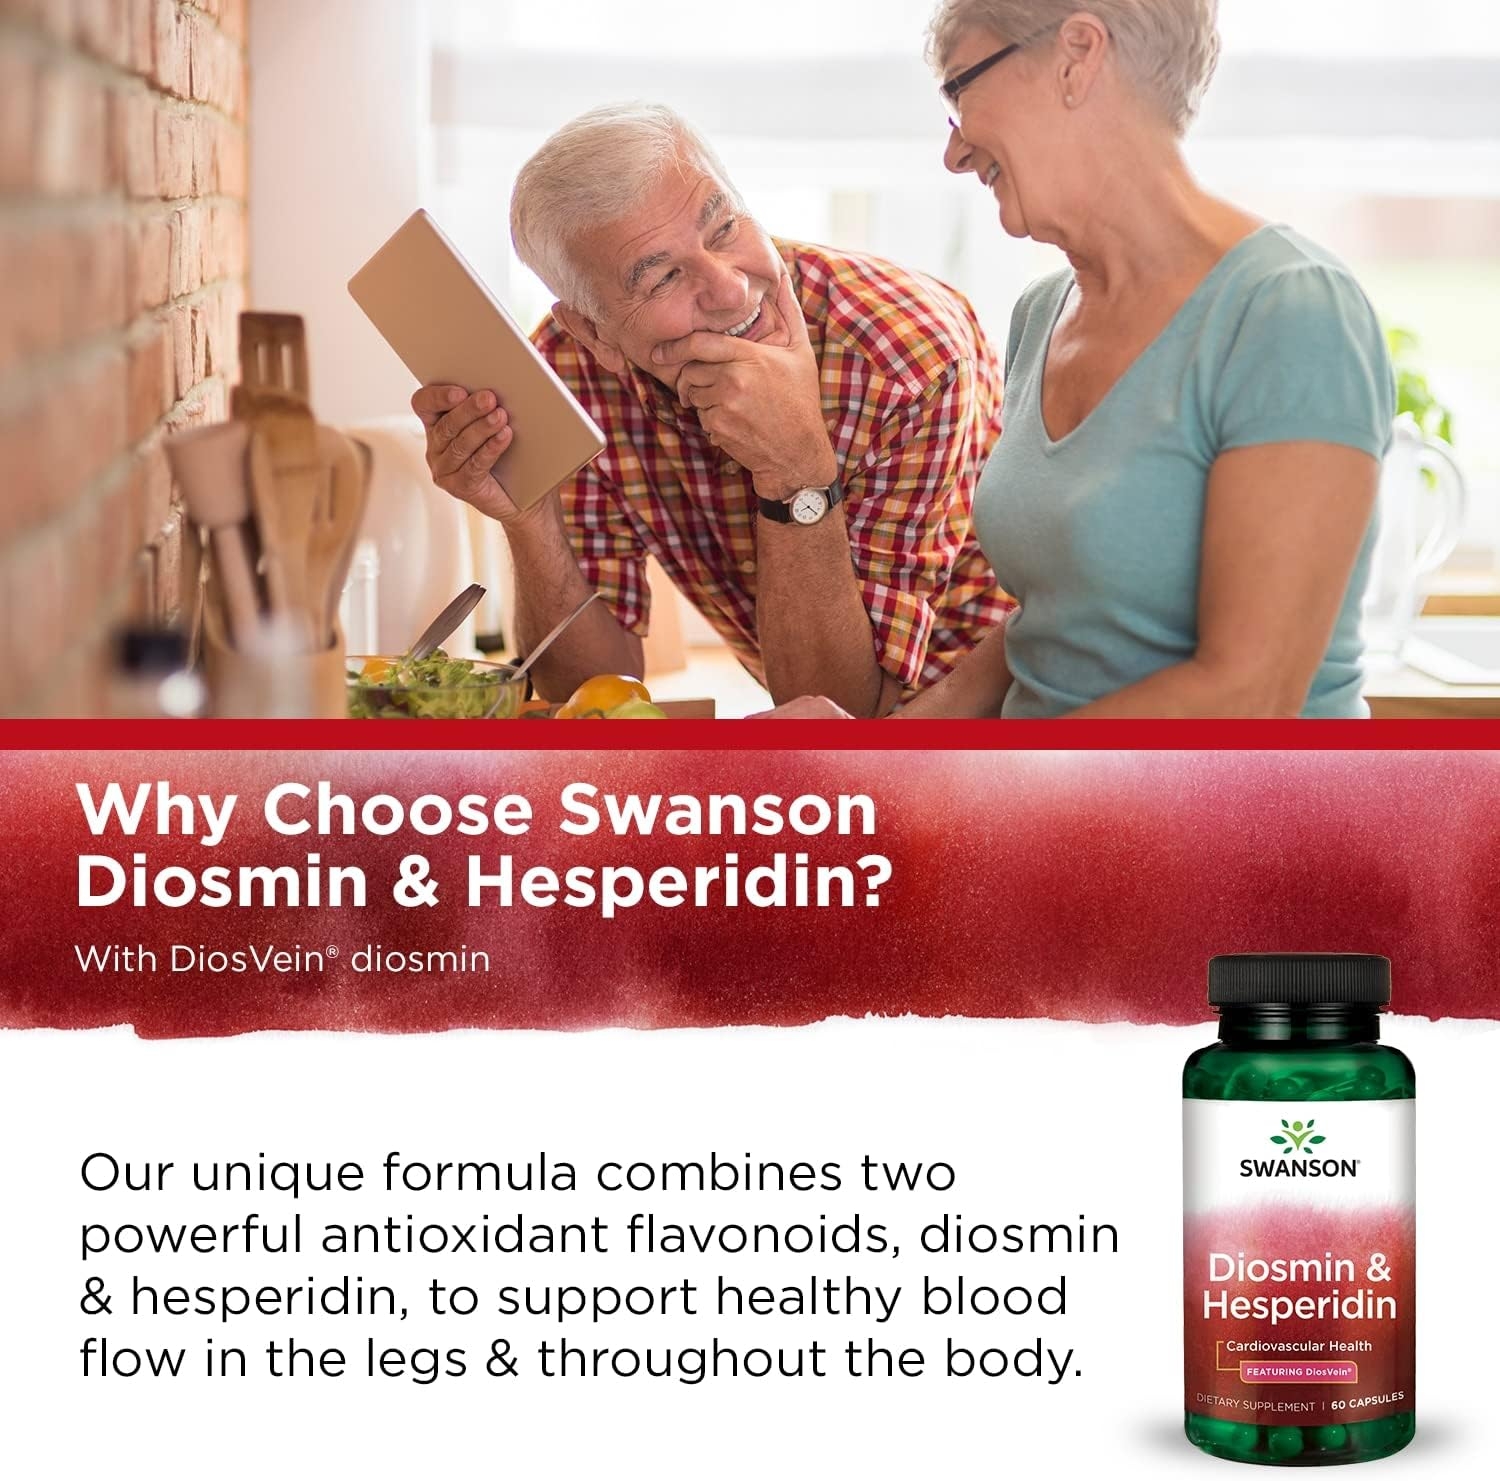 Swanson Diosmin Hesperidin Cardiovascular Support Blood Health Vascular Wall Integrity and Tone Antioxidant Activity Supplement 500 mg Diosmin from DiosVein® 100 mg Hesperidin 60 Capsules